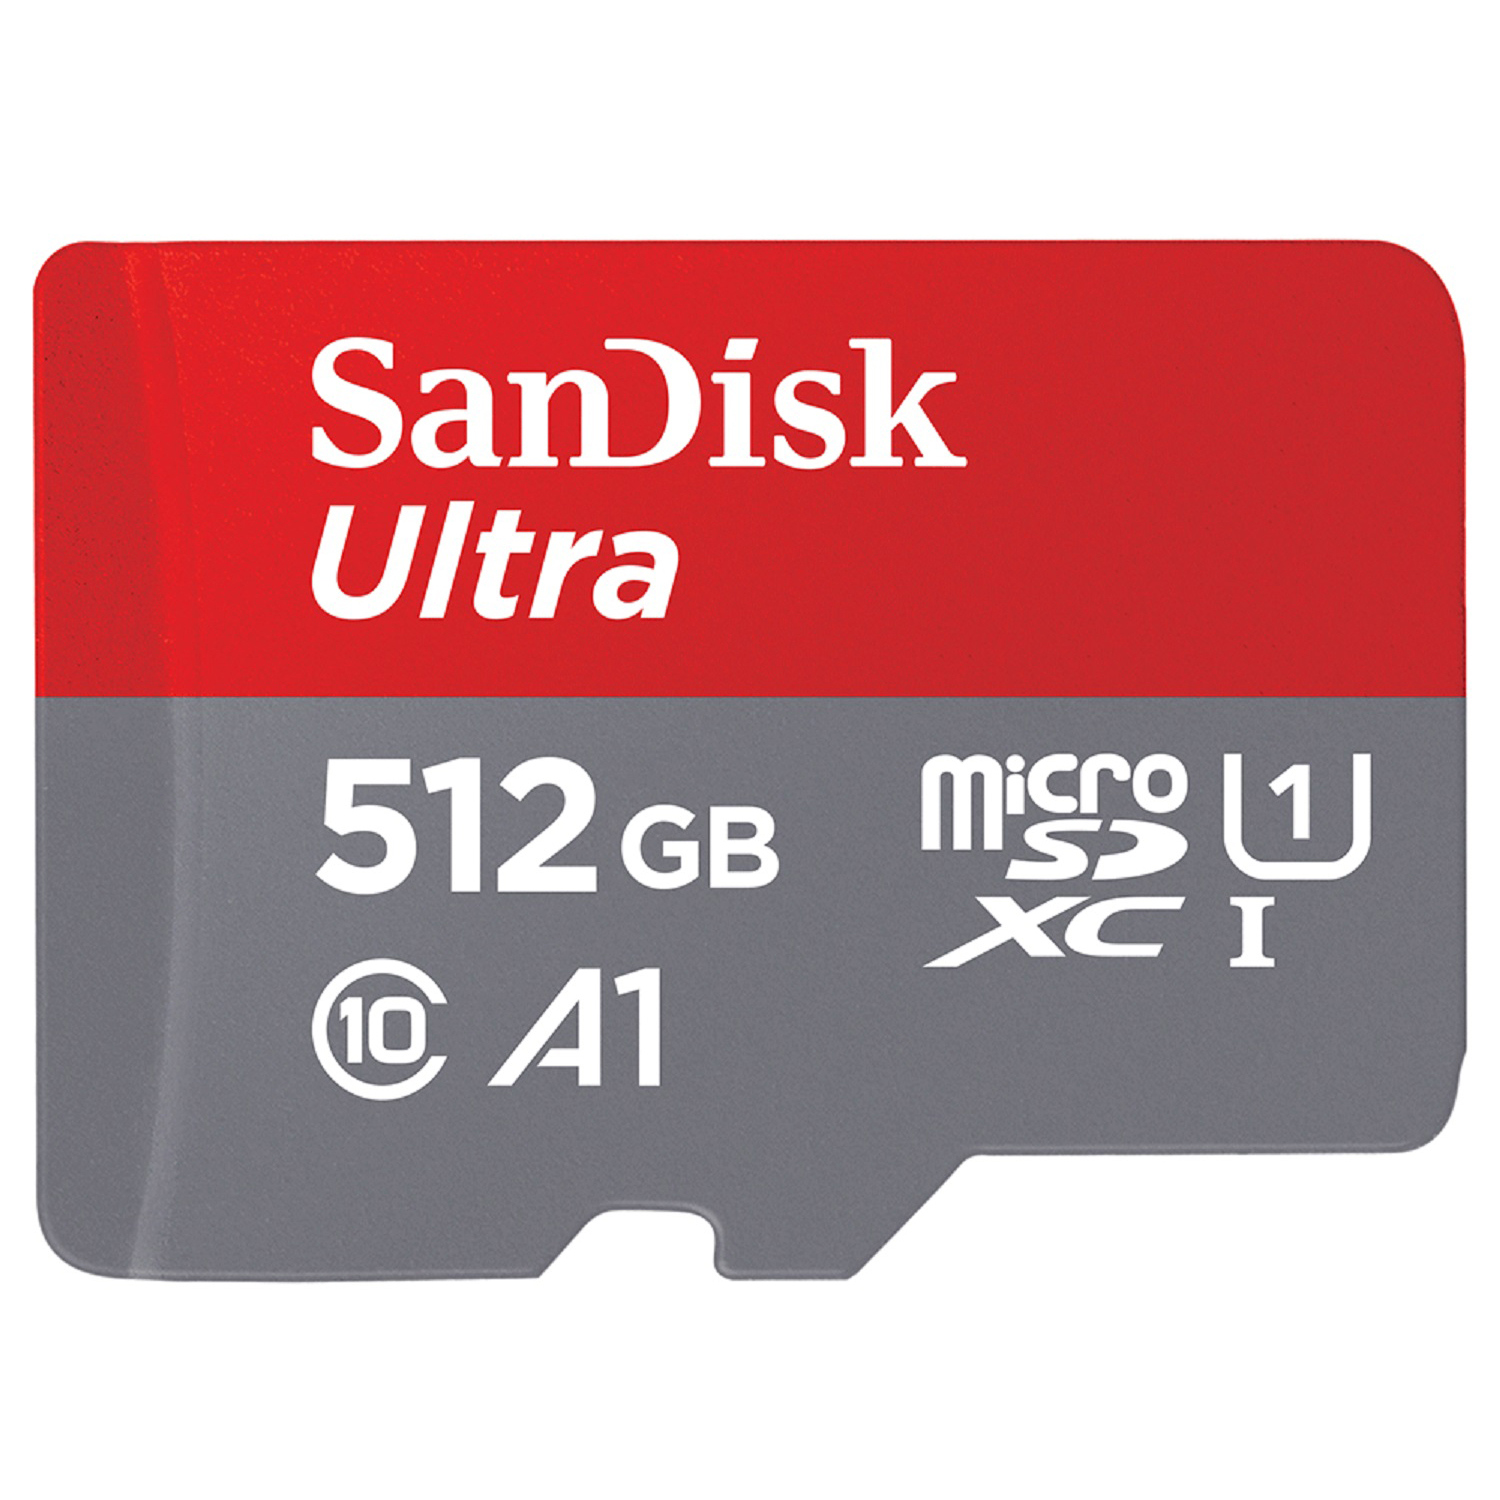 SanDisk Ultra® microSDXC ™